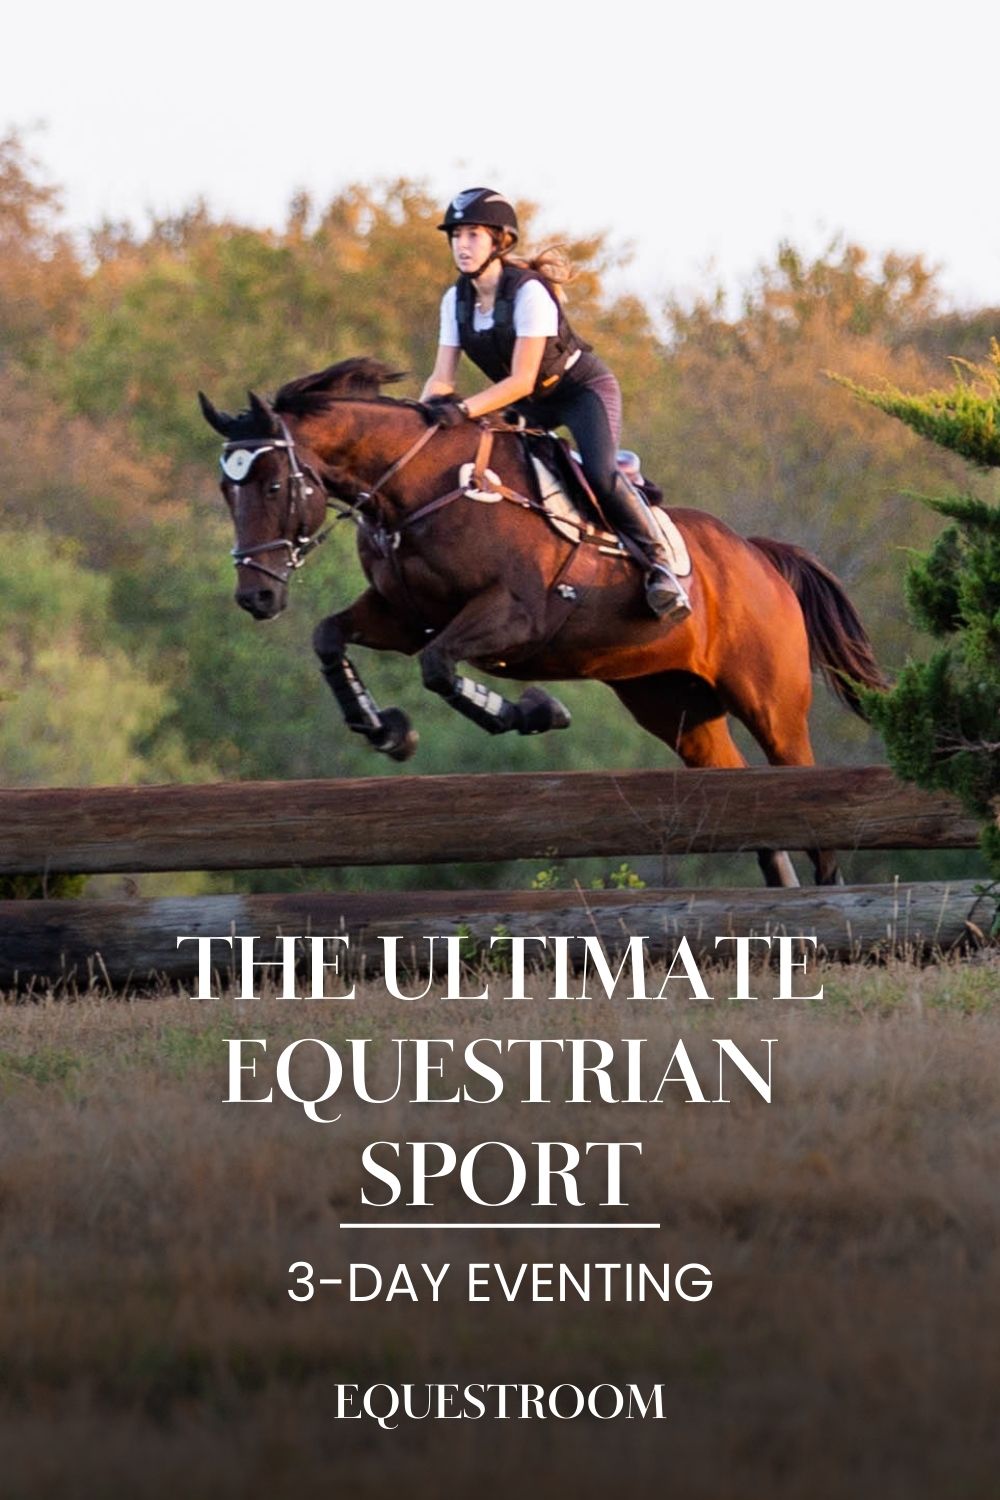 The Ultimate Equestrian Sport